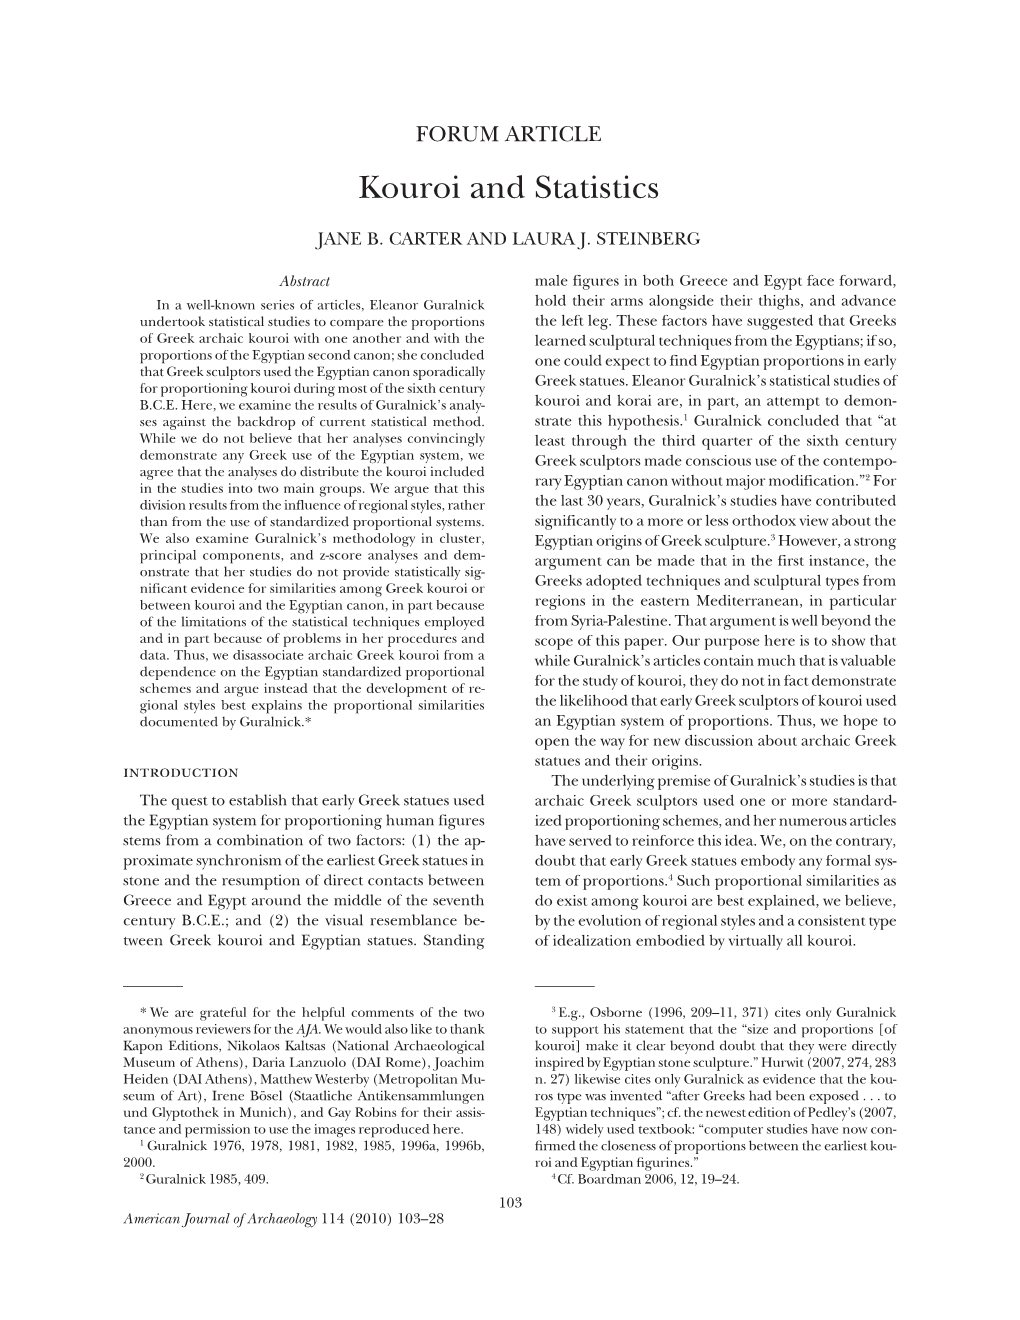 Kouroi and Statistics